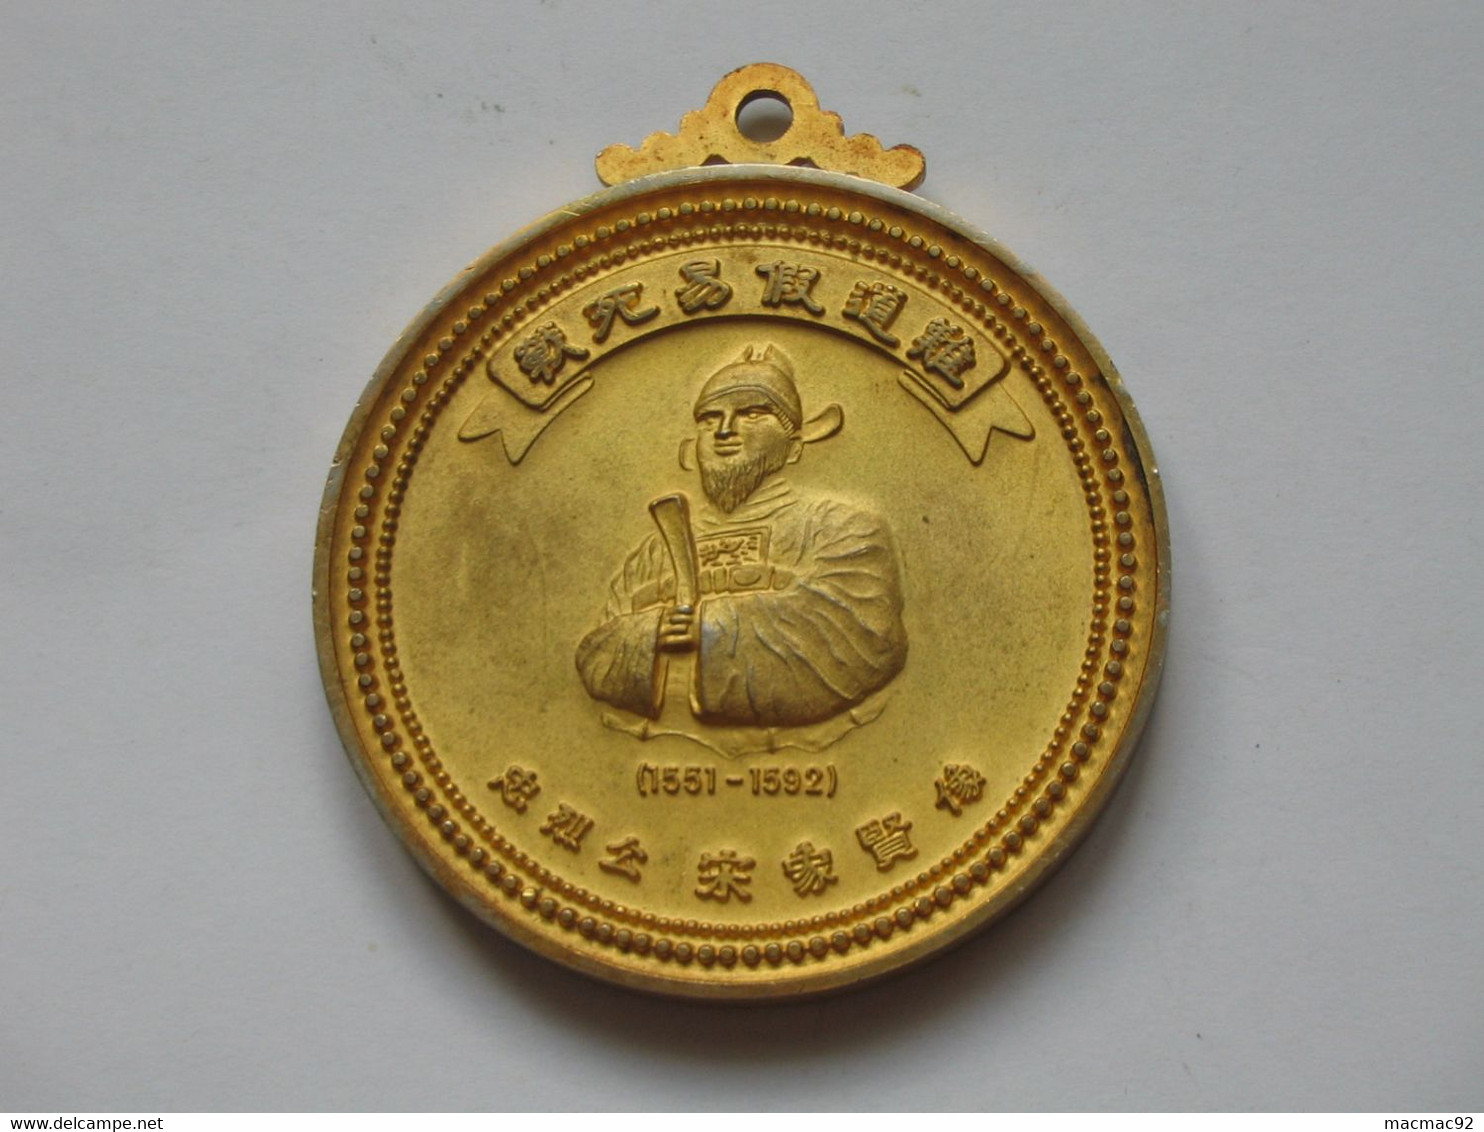 MAGNIFIQUE Médaille - WELCOME TO PUSAN REPUBLIC OF KOREA - MAYOR OF PUSAN  **** EN ACHAT IMMEDIAT  **** - Adel